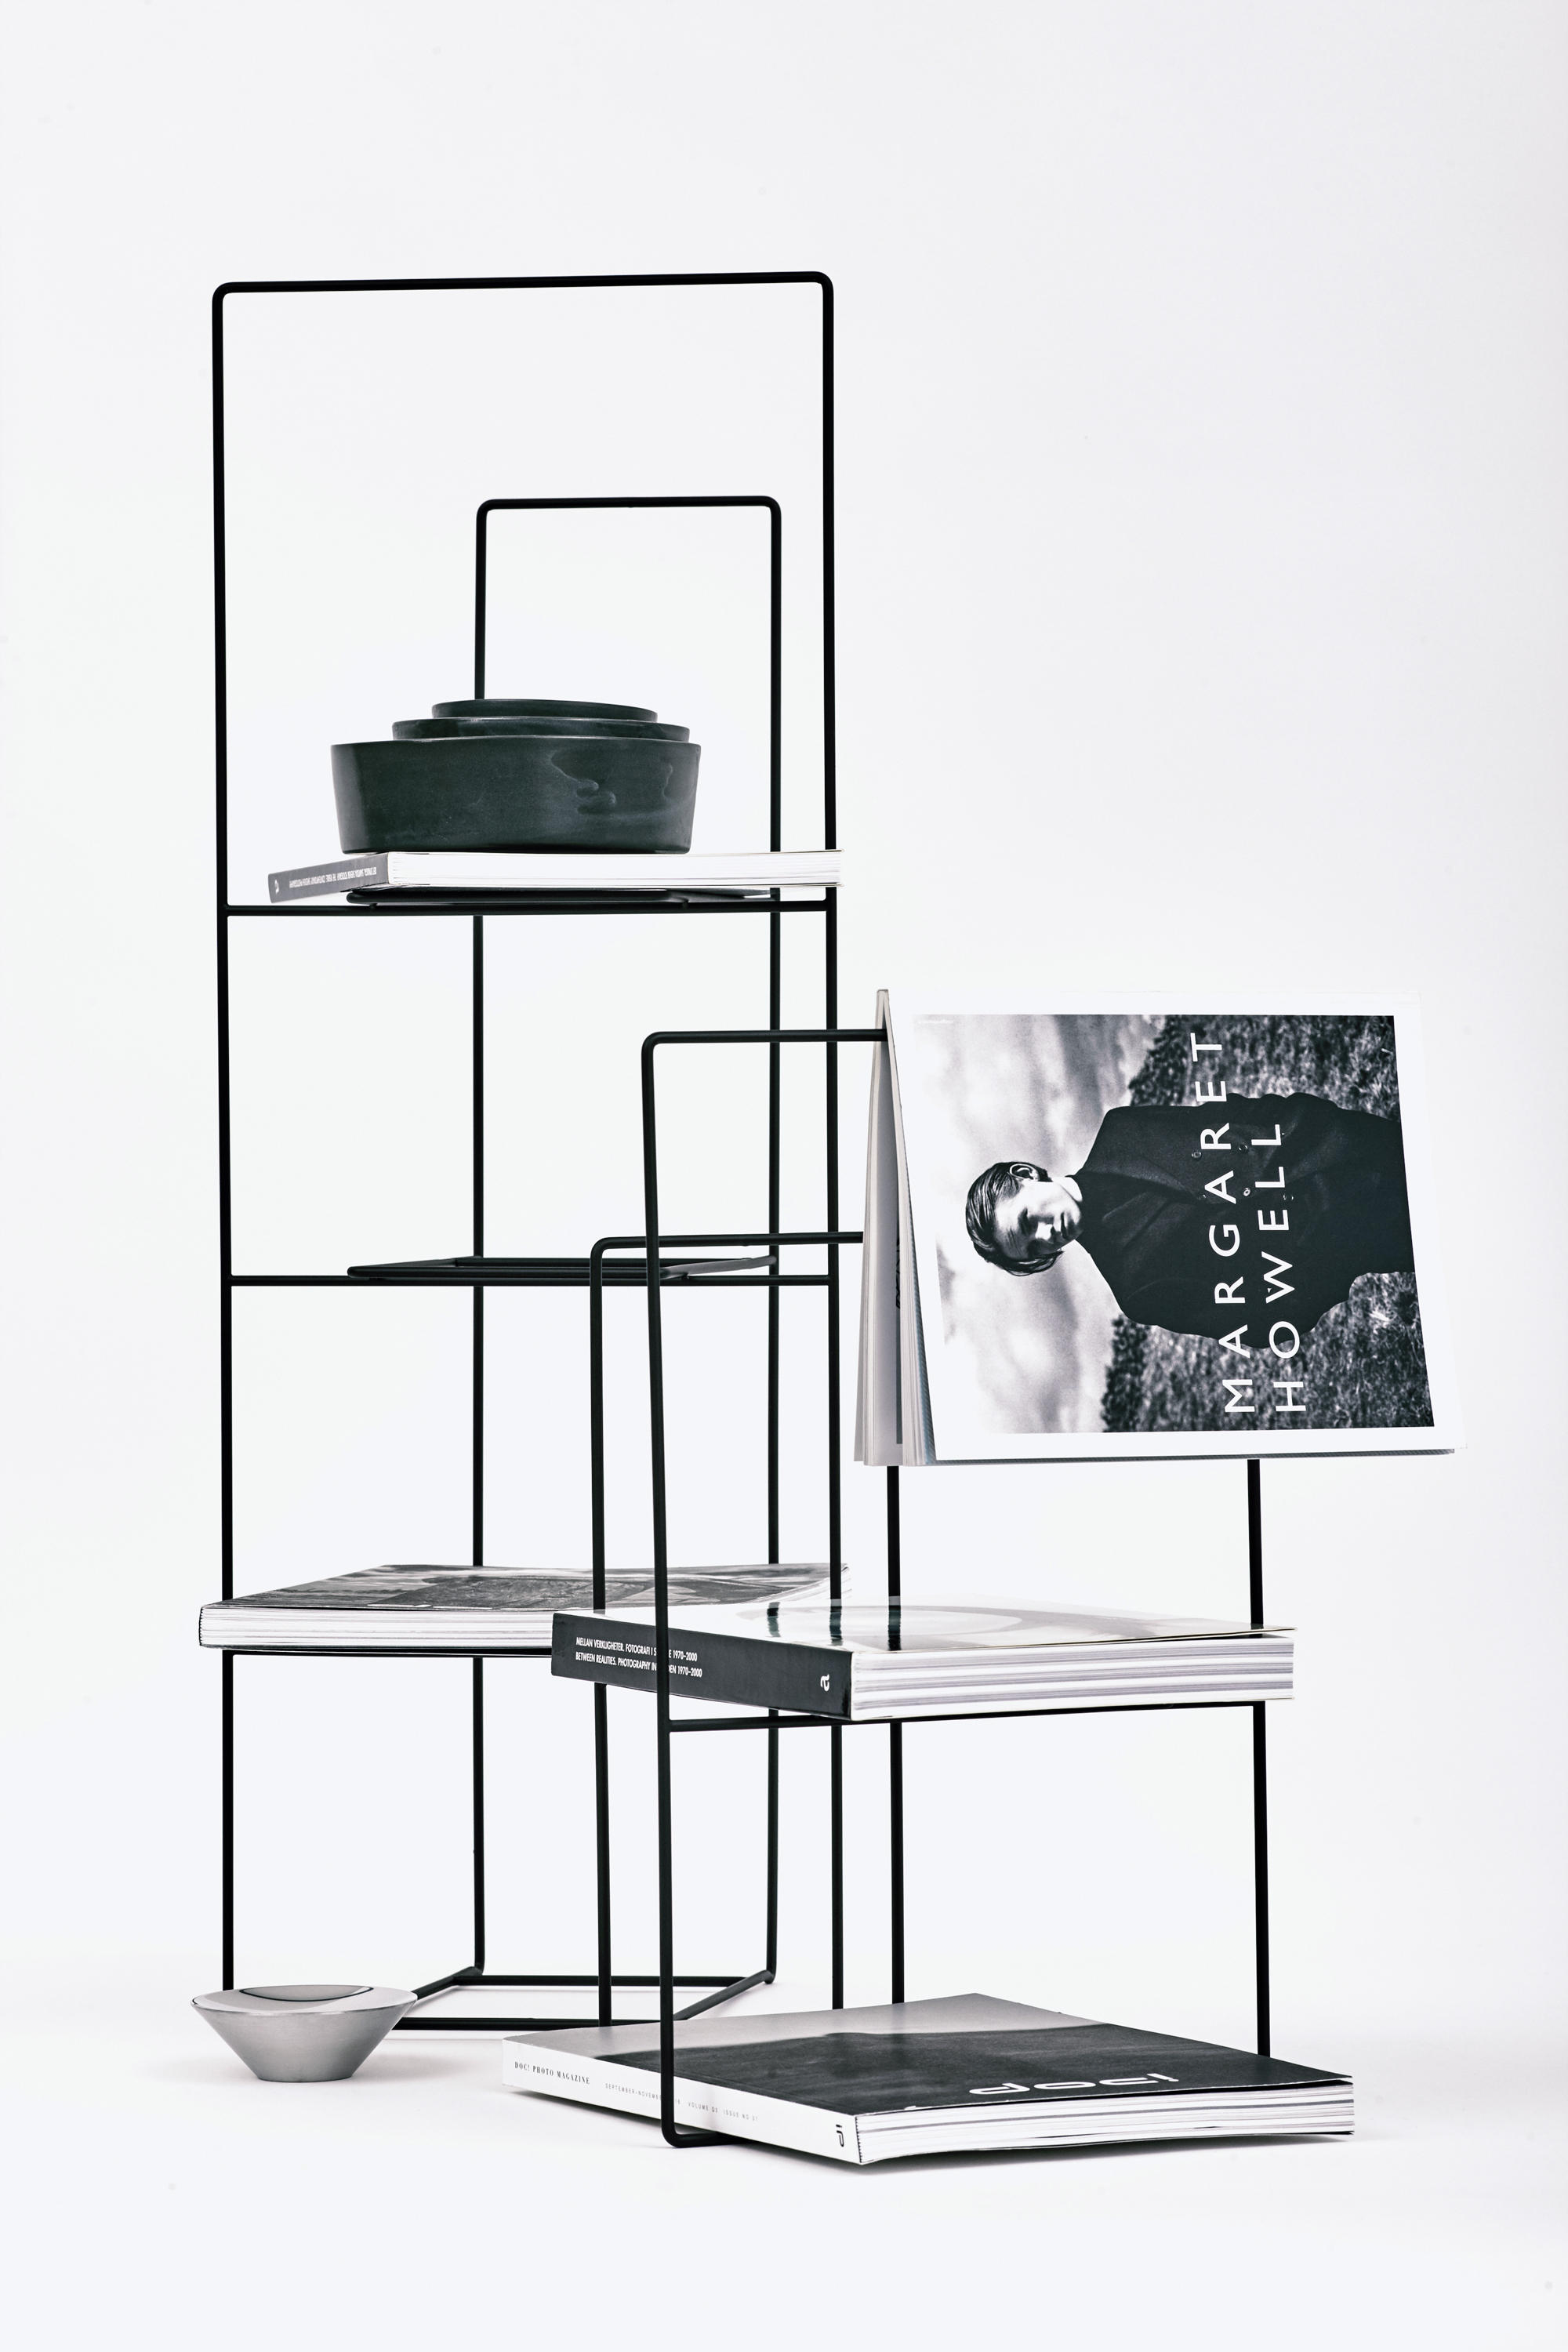 Rewire Magazine newspaper storage rack, tre product, medium black